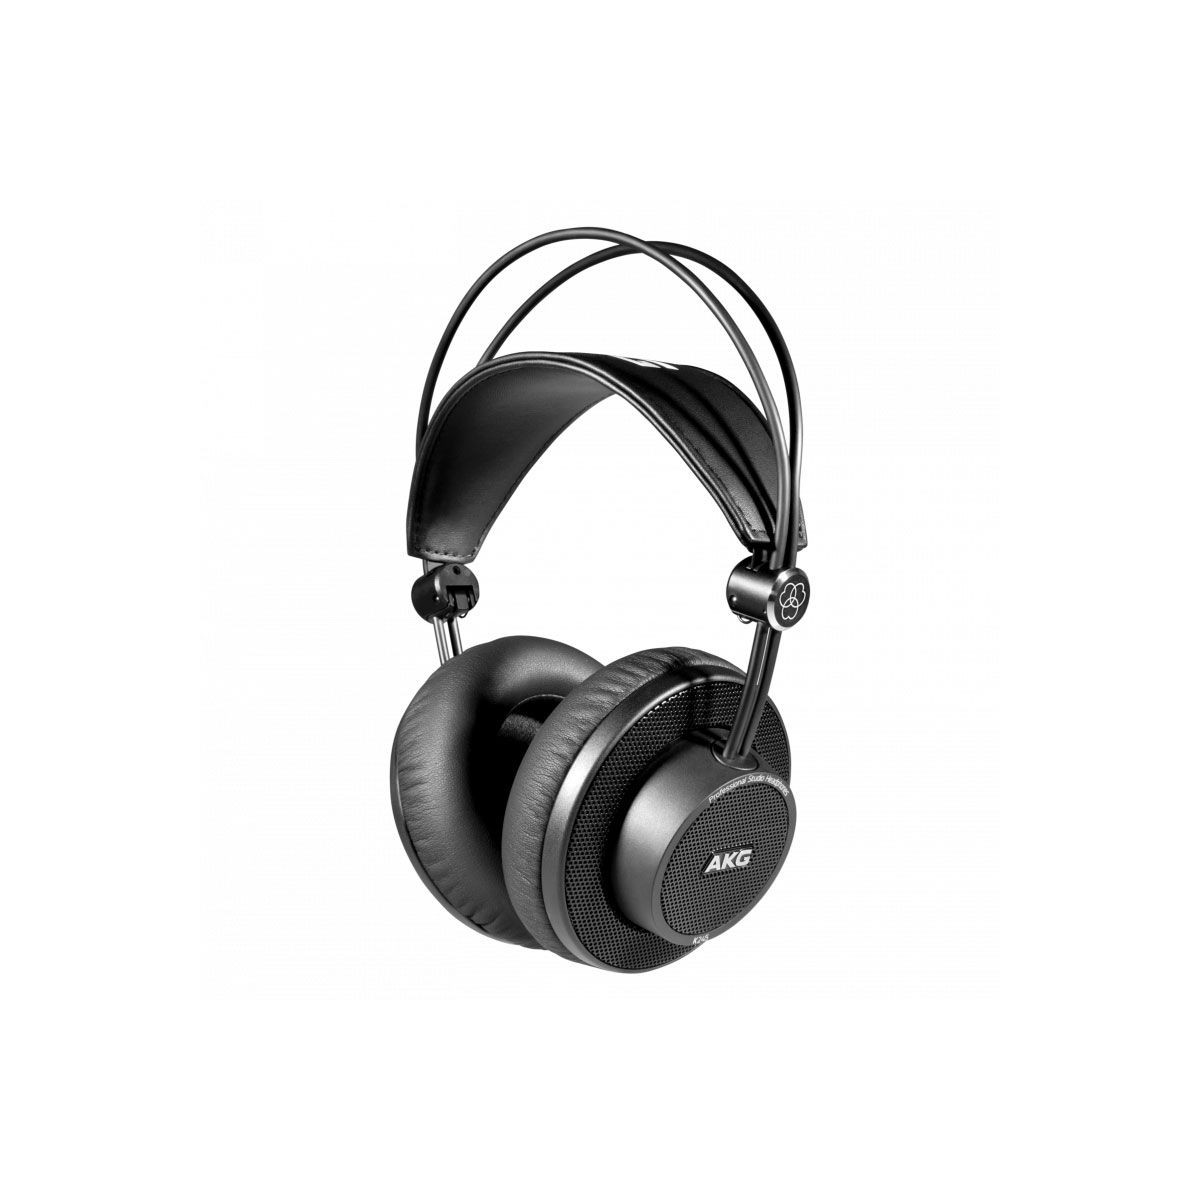 https://101db.com.ar/8360-Productos/auriculares-profesionales-de-estudio-akg-k245-plegables-driver-40mm-over-ear.jpg